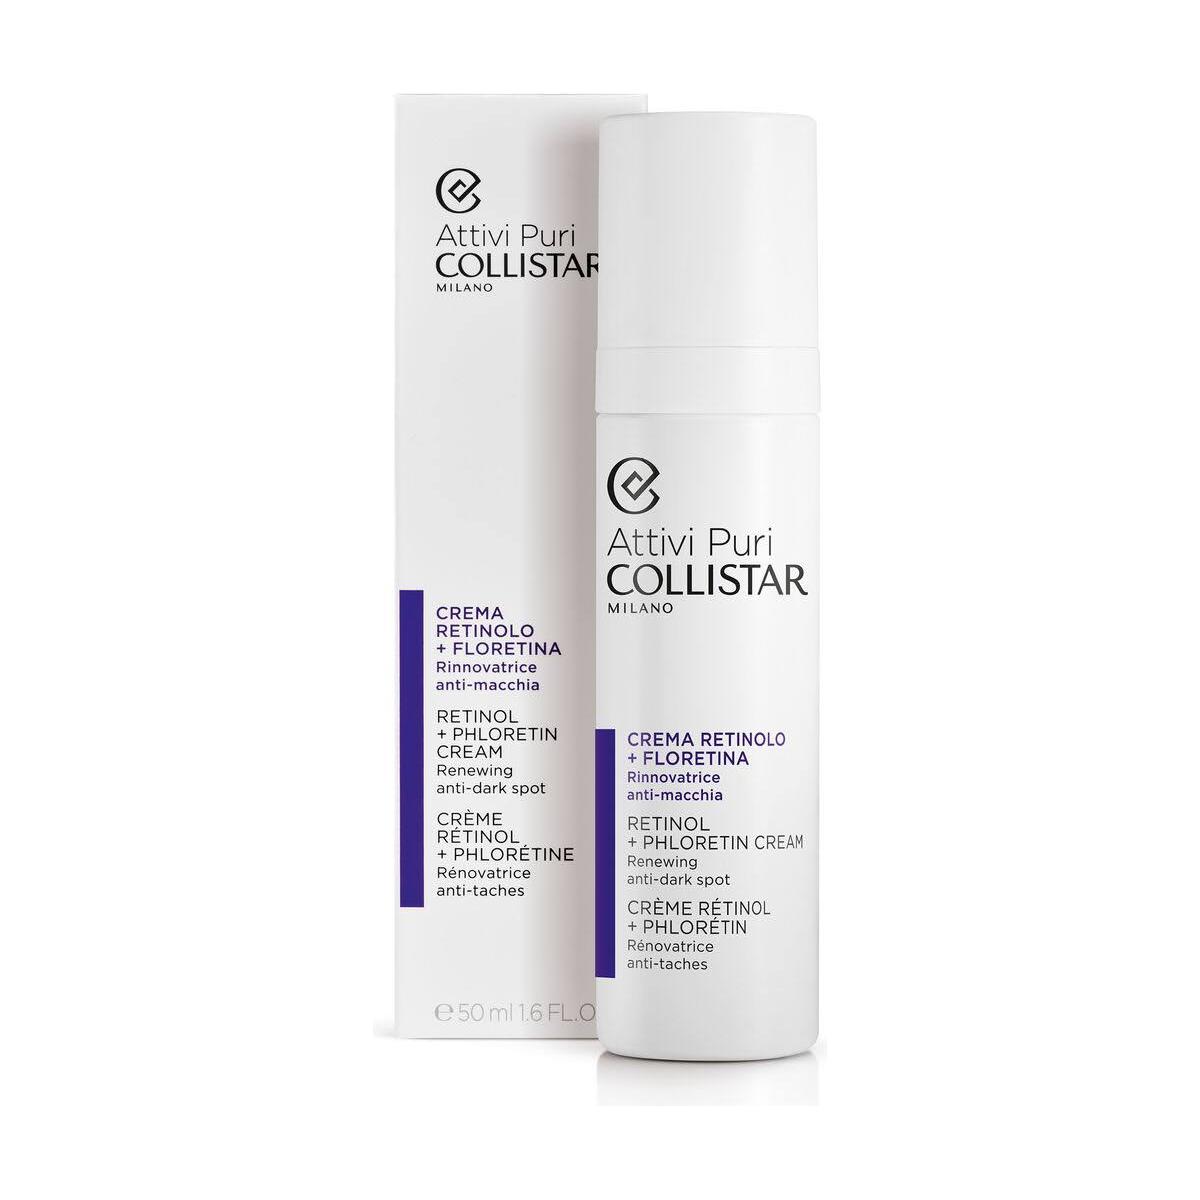 Collistar Attivi Puri Retinol + Phloretin Cream - 50ml - Glam Global UK